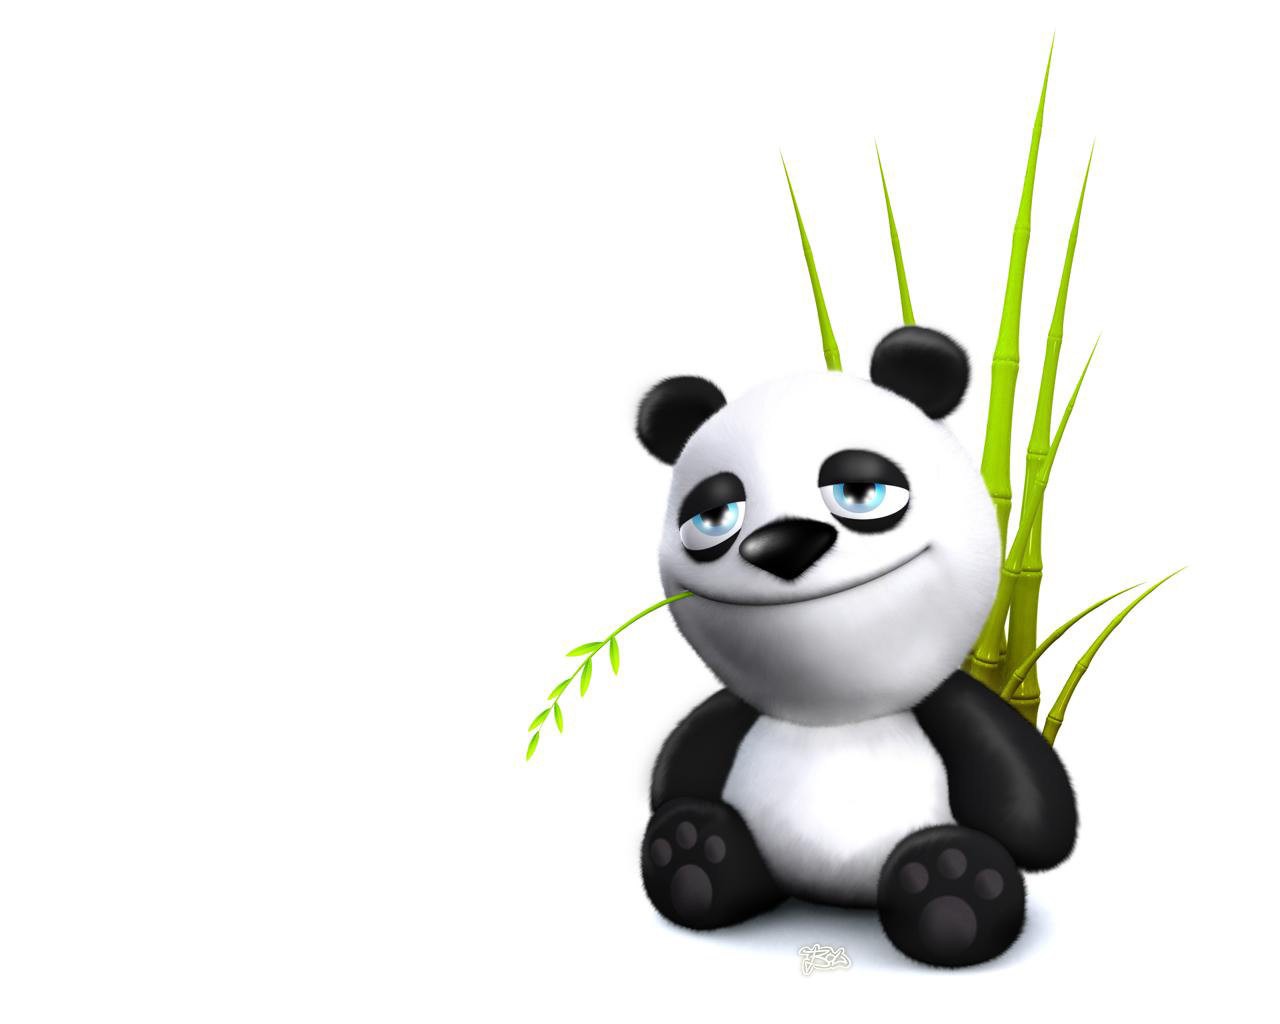 3d обои Прикольная панда (бамбуковый медведь) меланхолично жуёт побеги молодого бамбука  минимализм # 54722